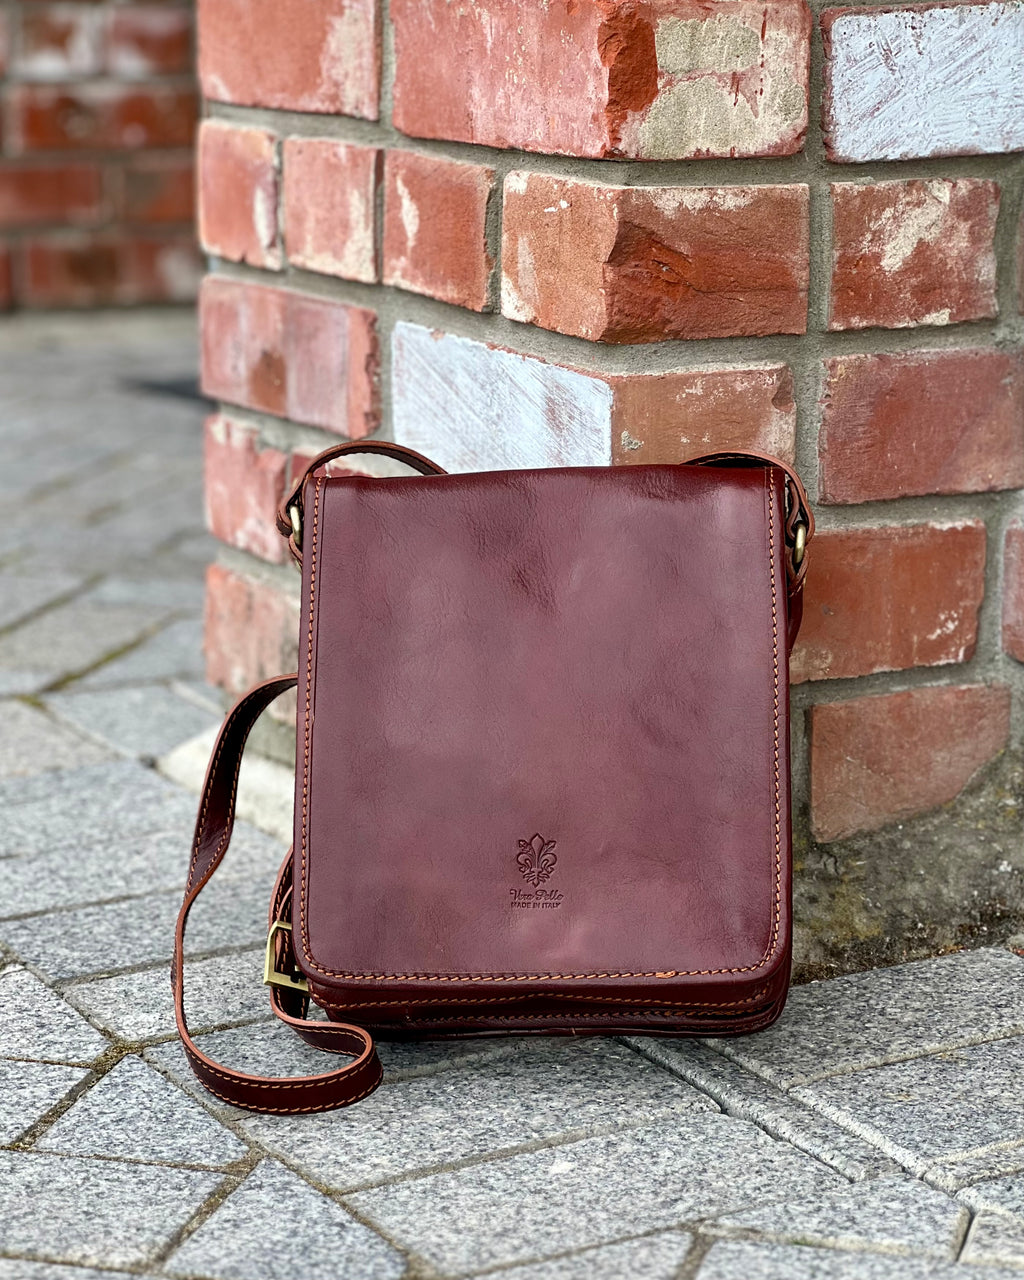 Dark brown genuine leather satchel by Emporia Italia